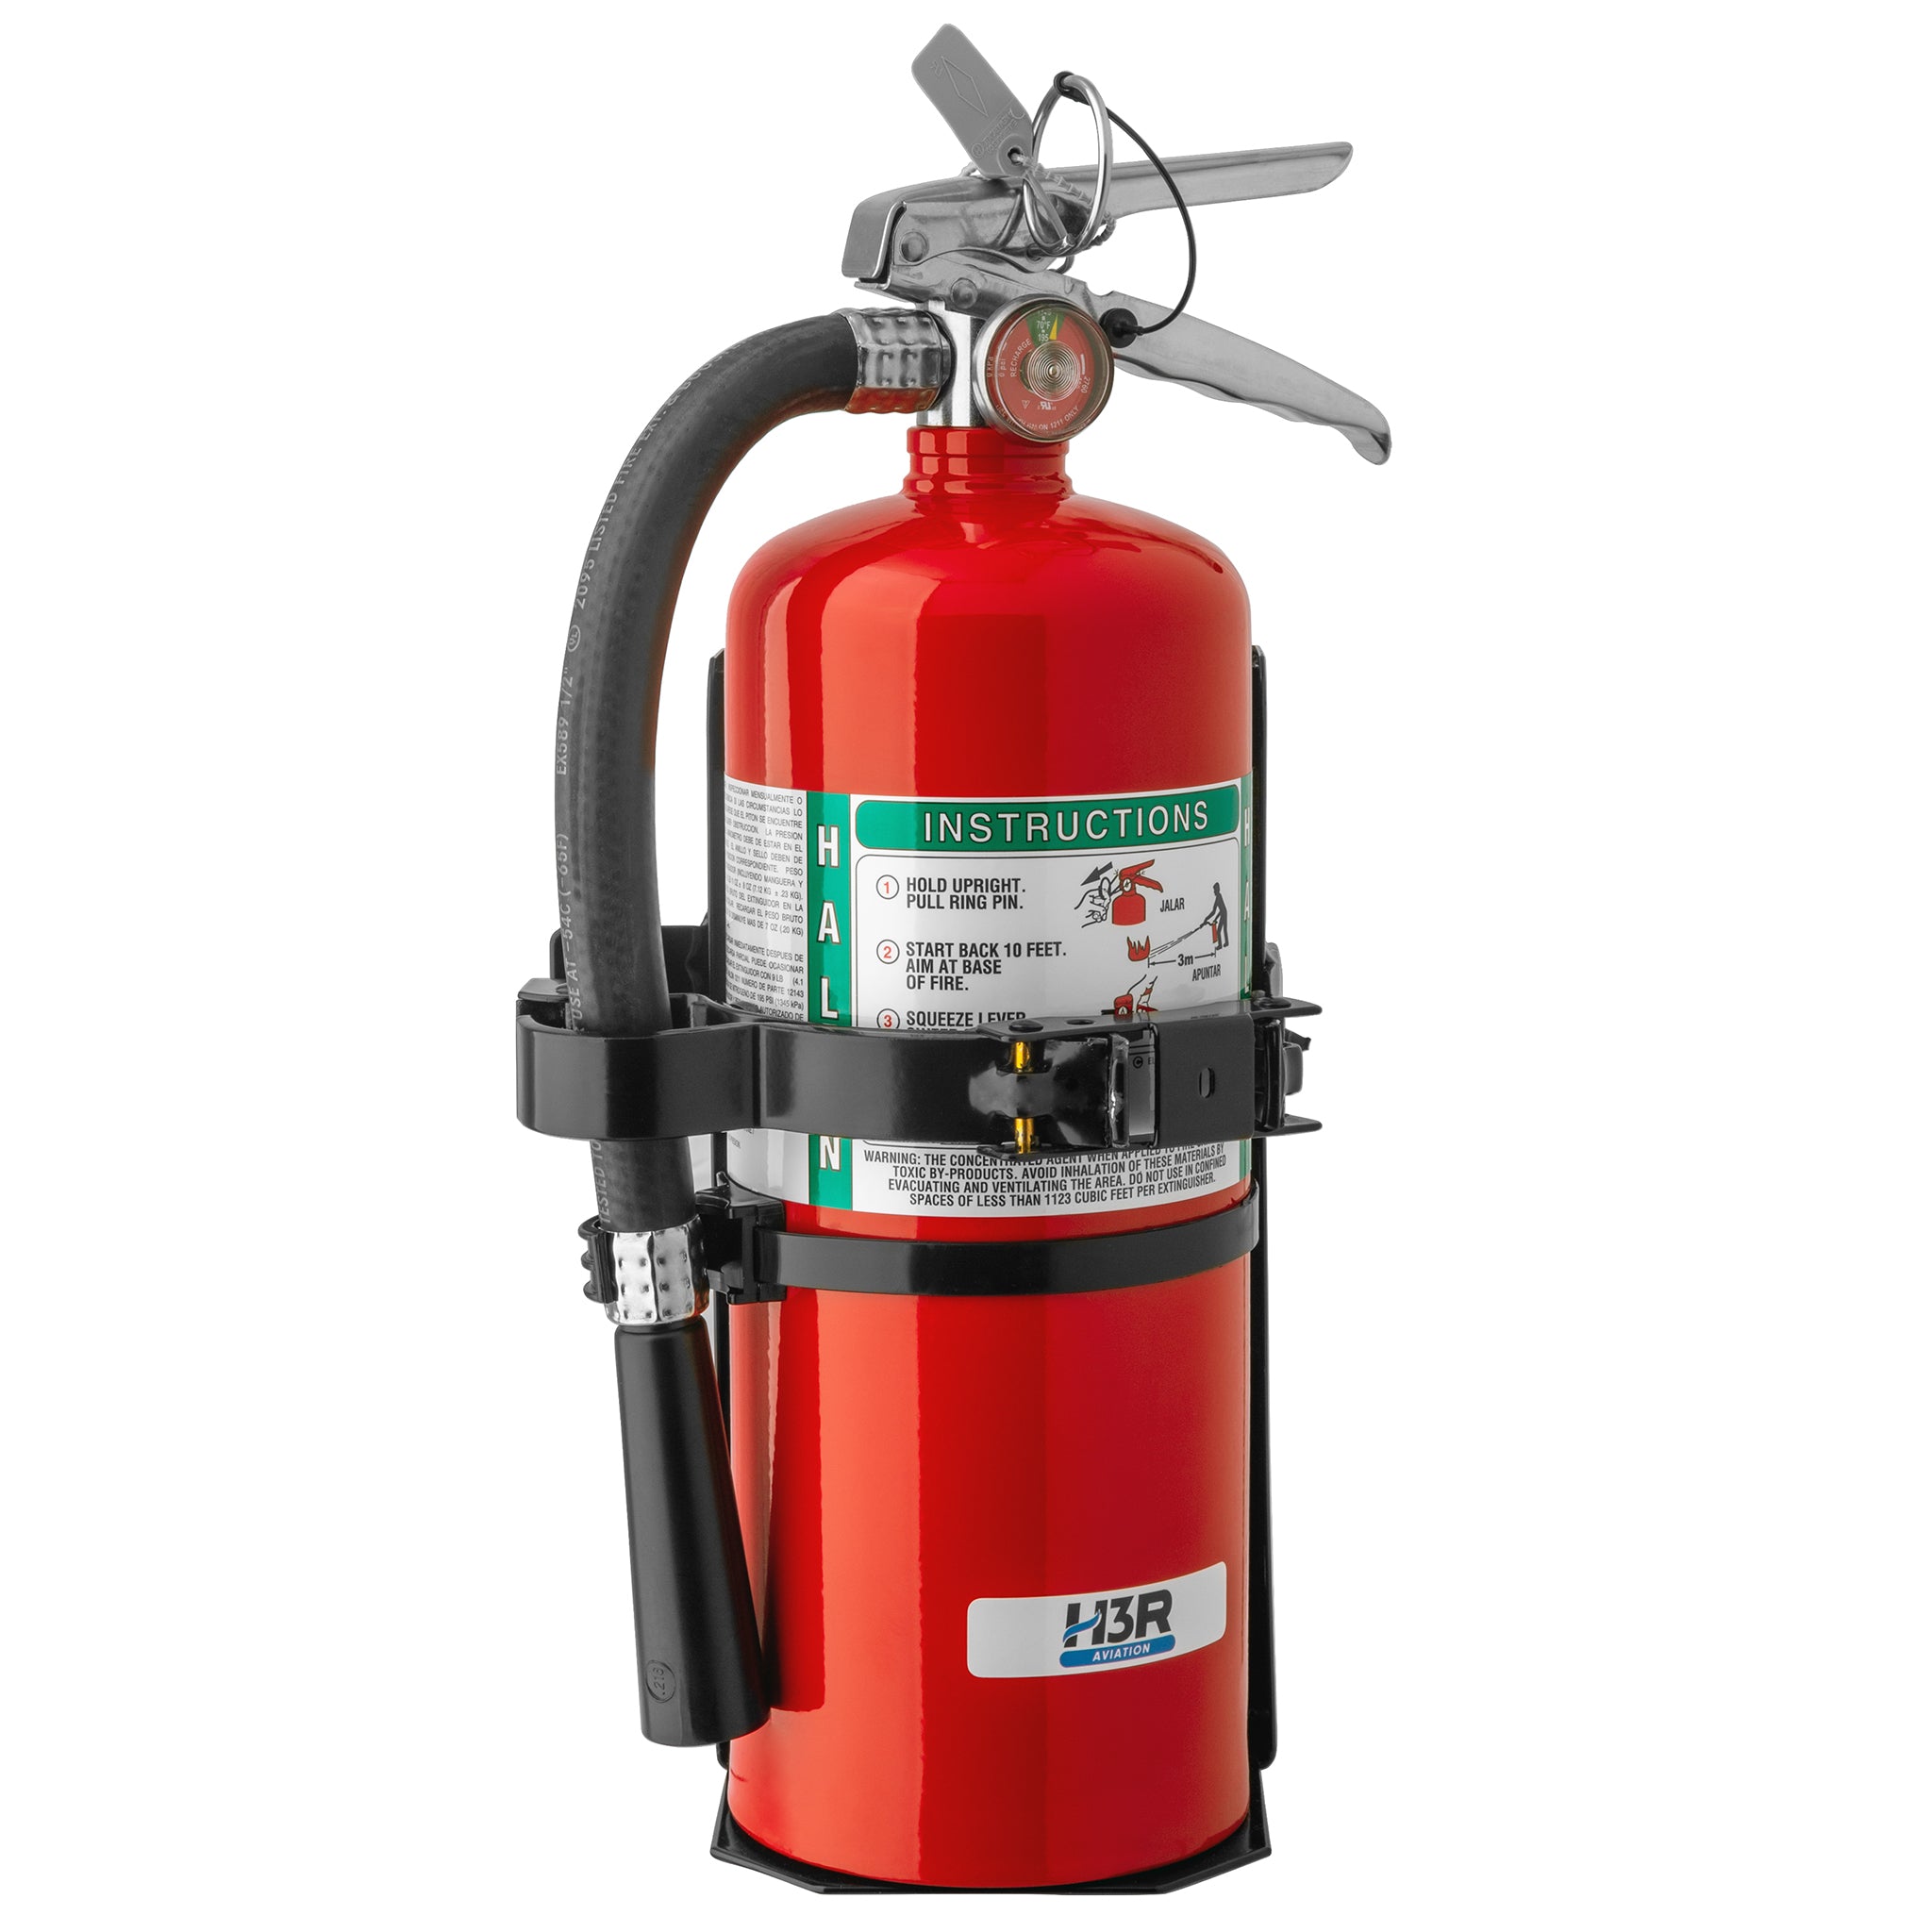 B369 - 9.0 lb. Halon Fire Extinguisher